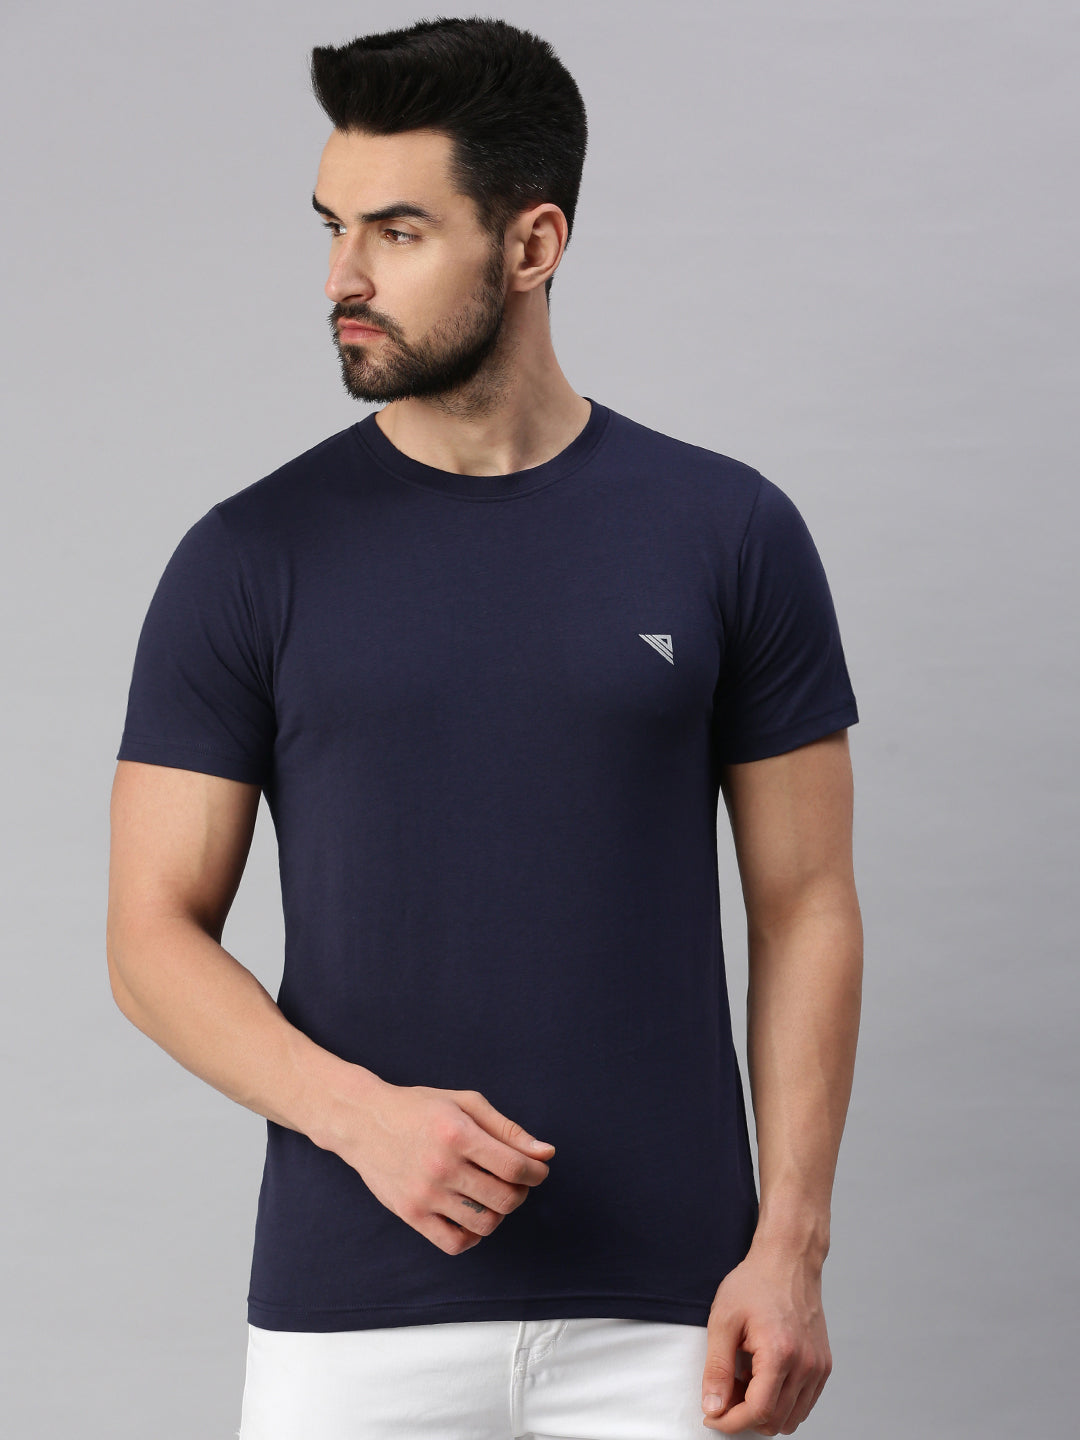 Shop the Best Men's T-Shirt Combo: Ramraj Cotton [+Special Offer]